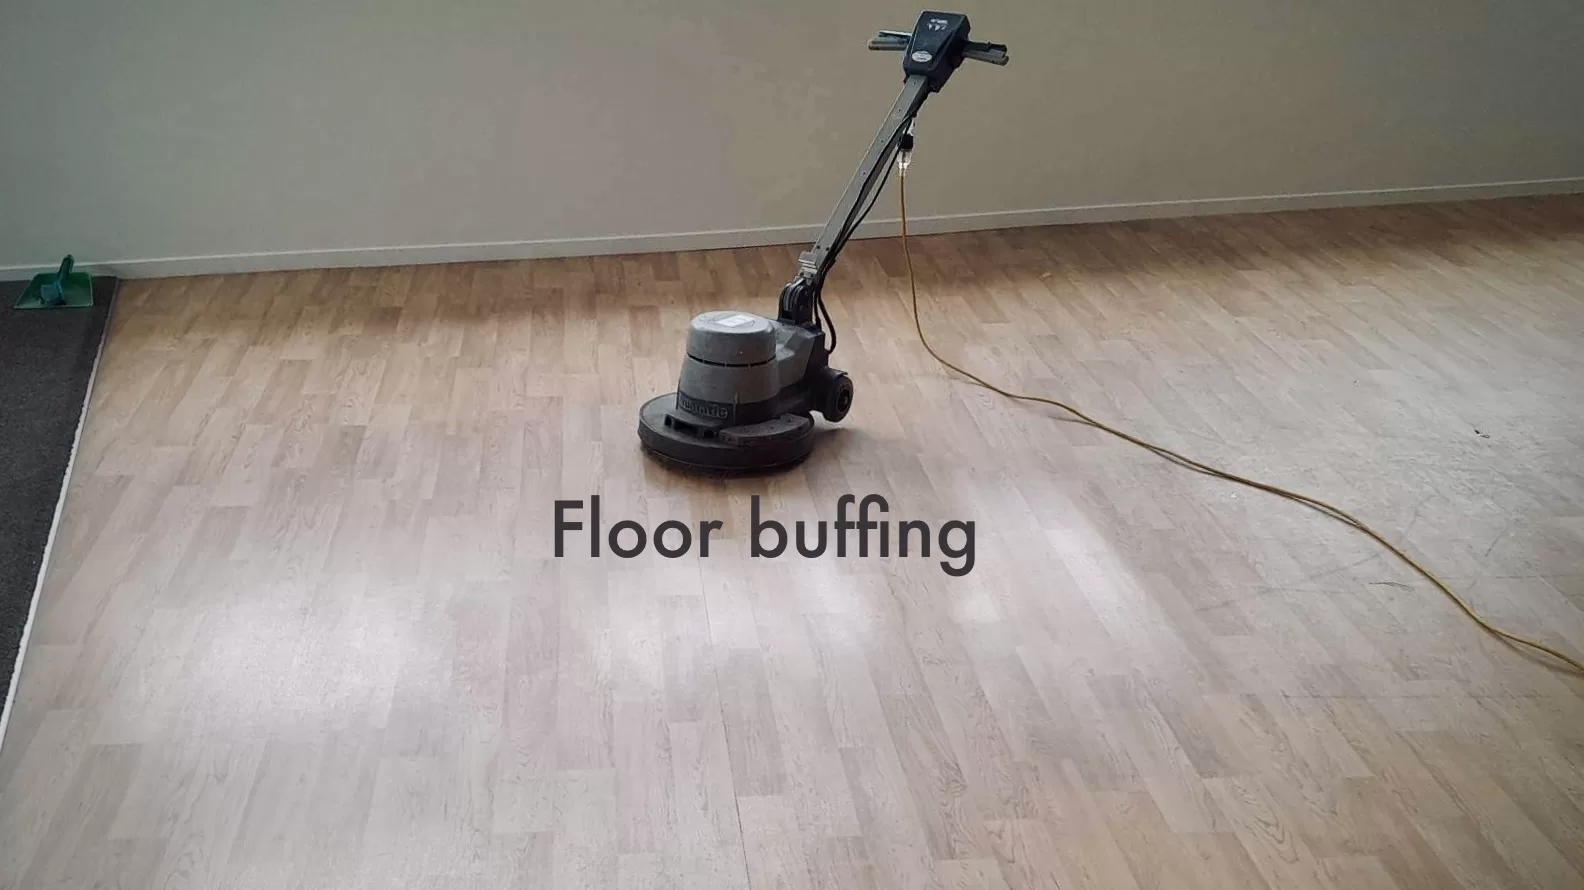 Floor buffing